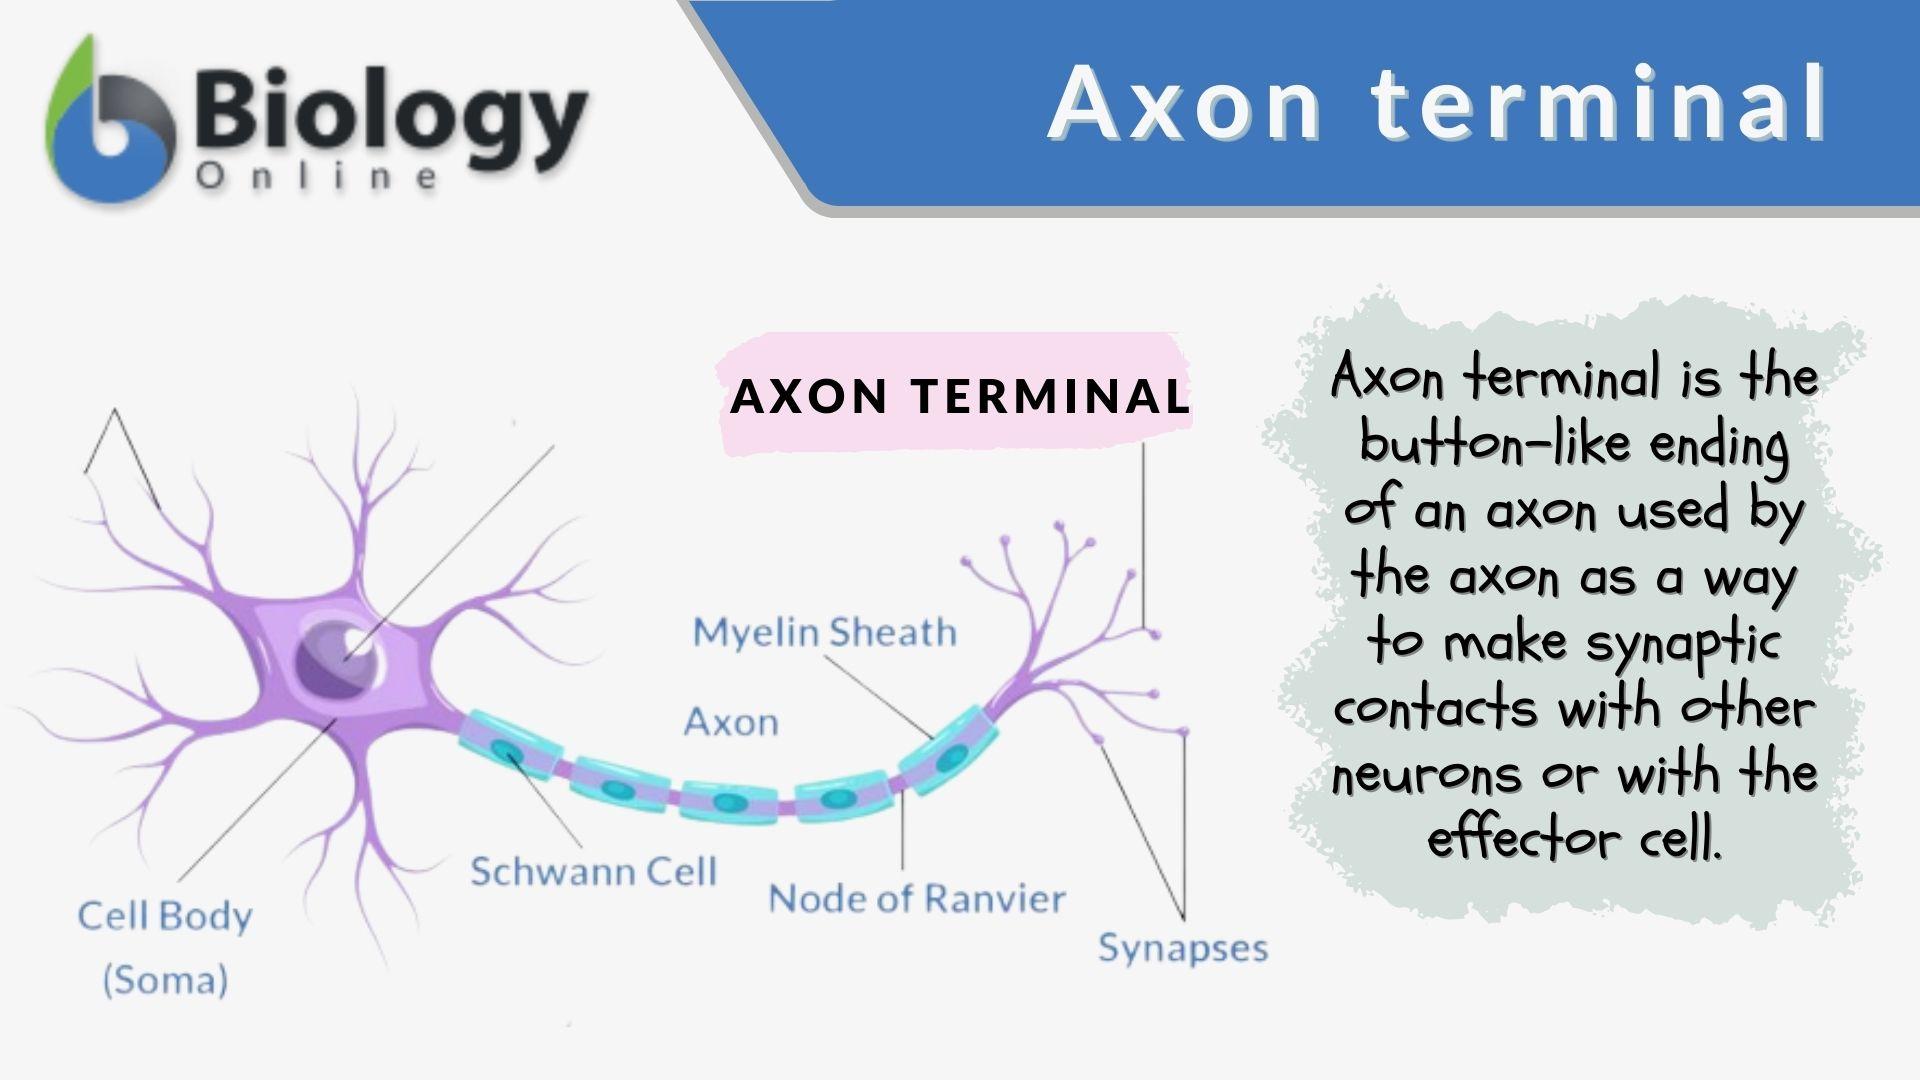 neuron diagram labeled synapse